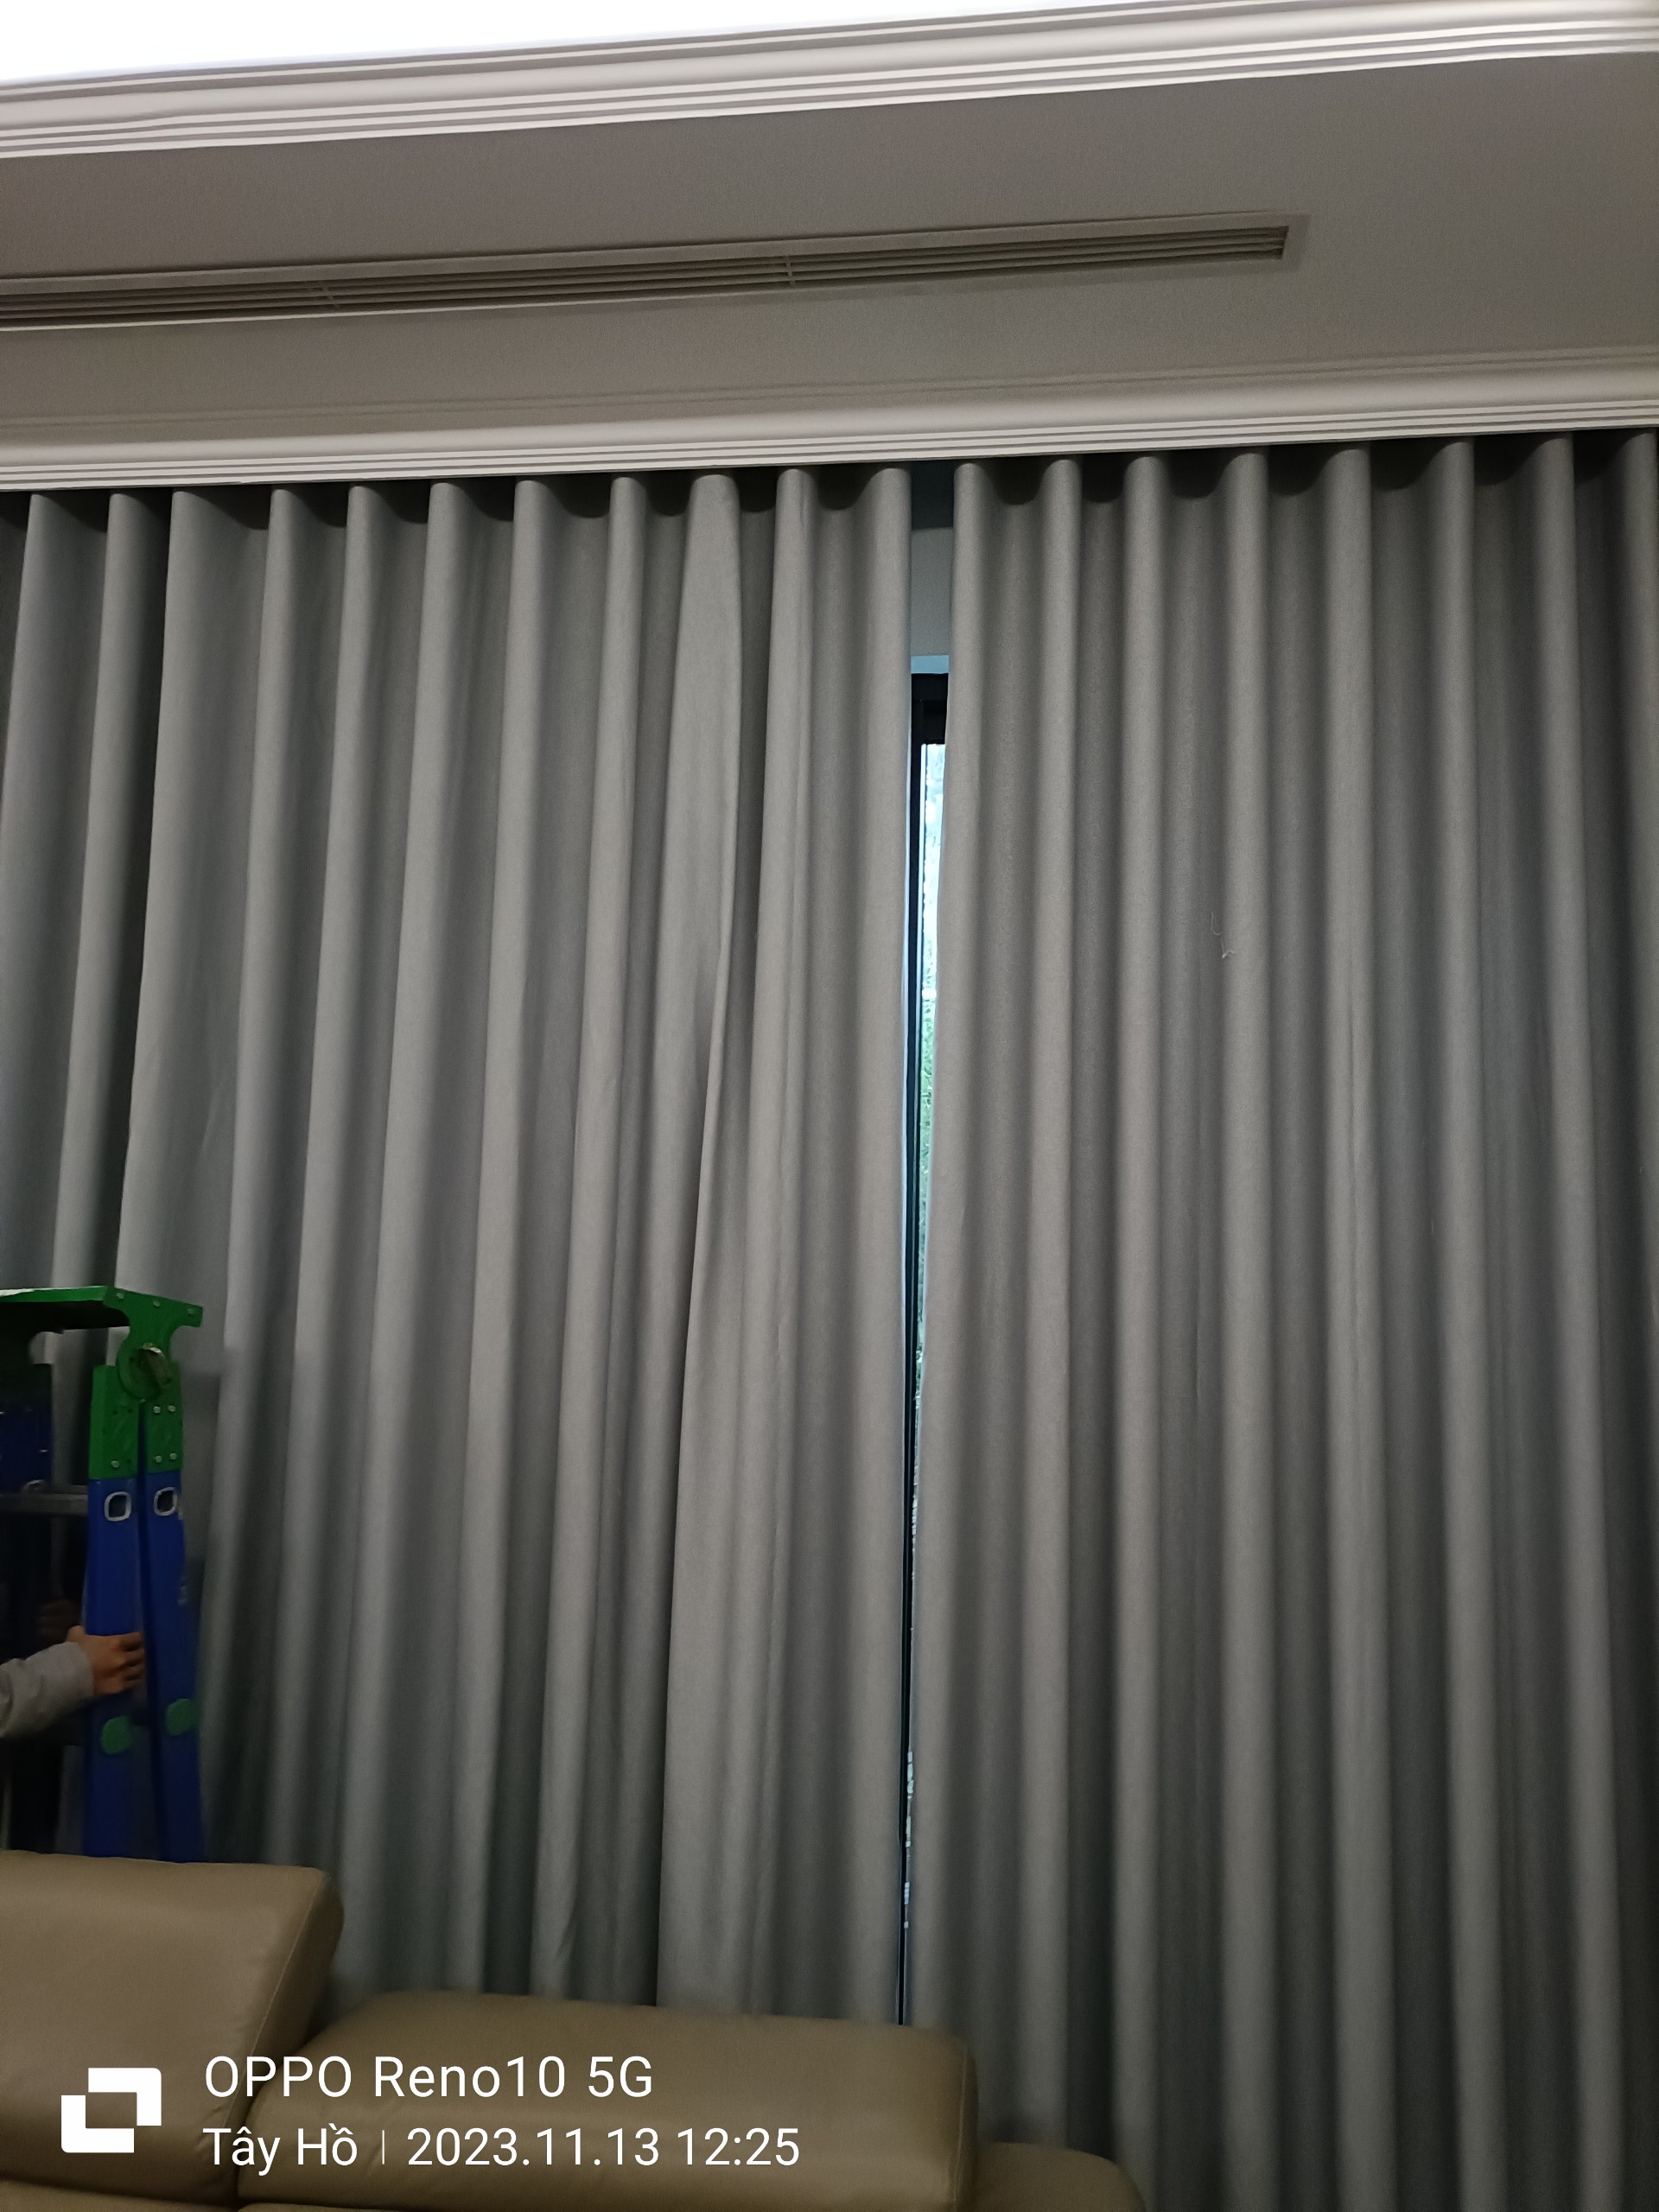 Customized curtains